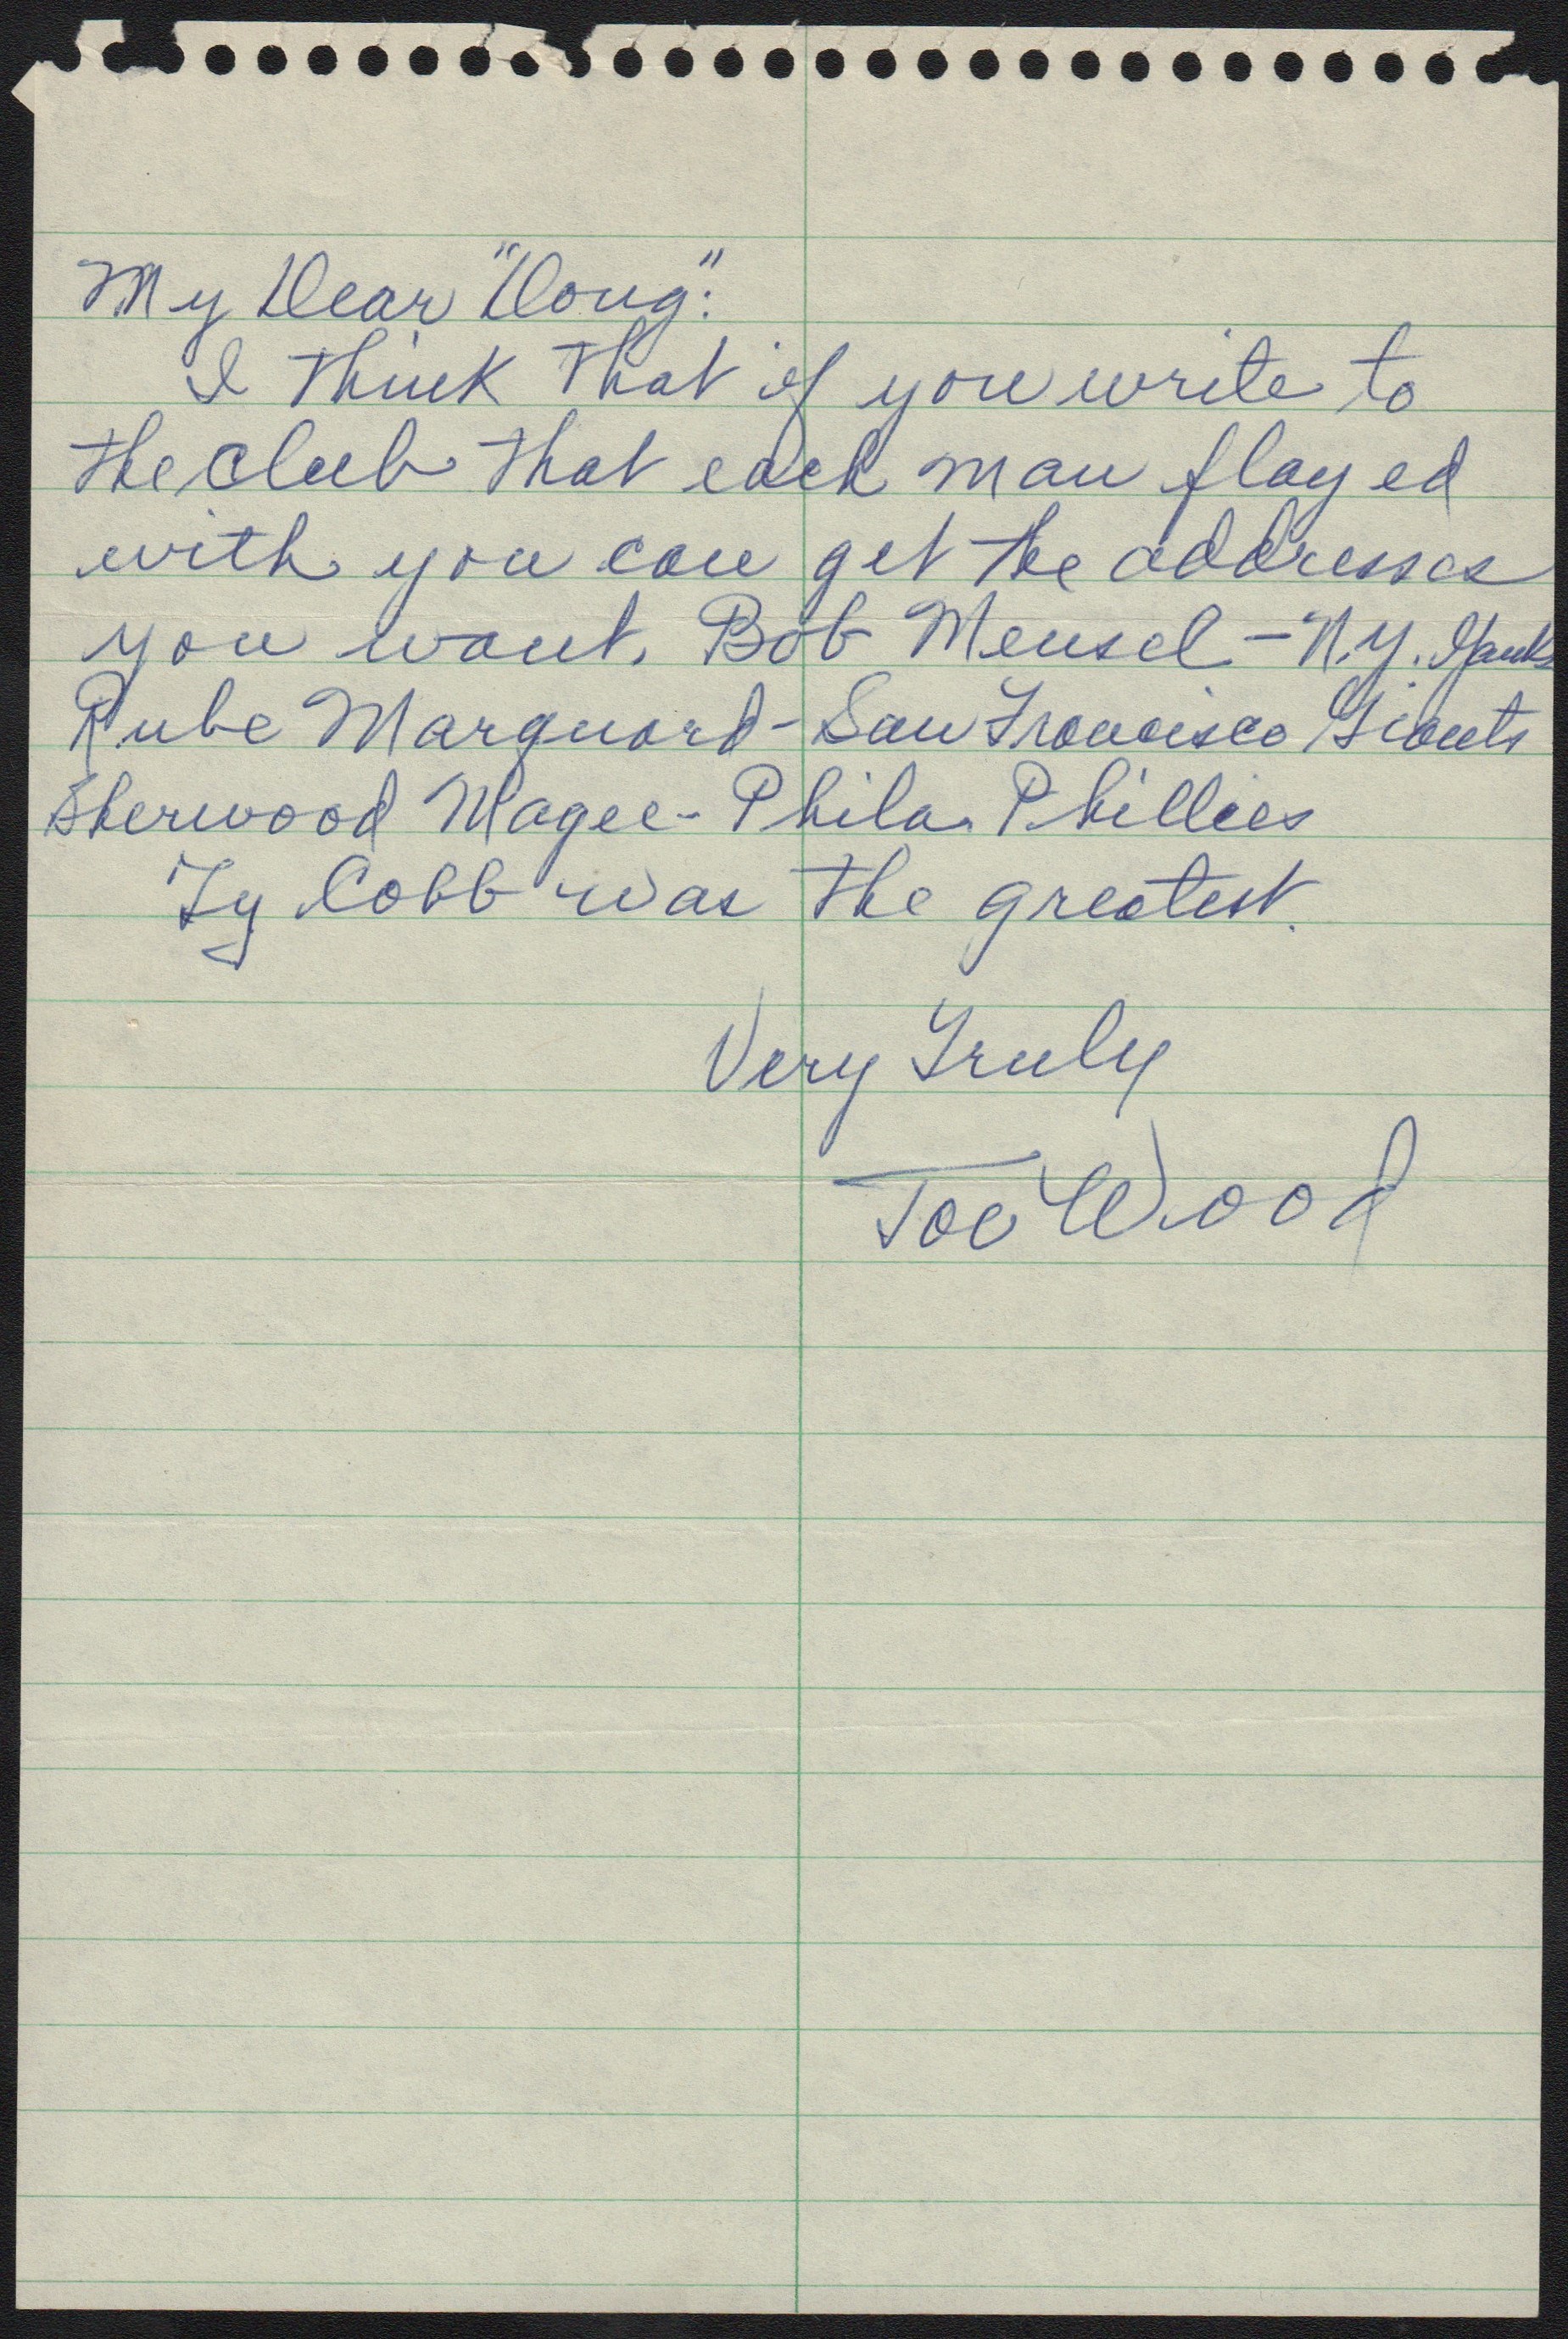 - Smokey Joe Wood Hand Written Letter w/ Ty Cobb Content